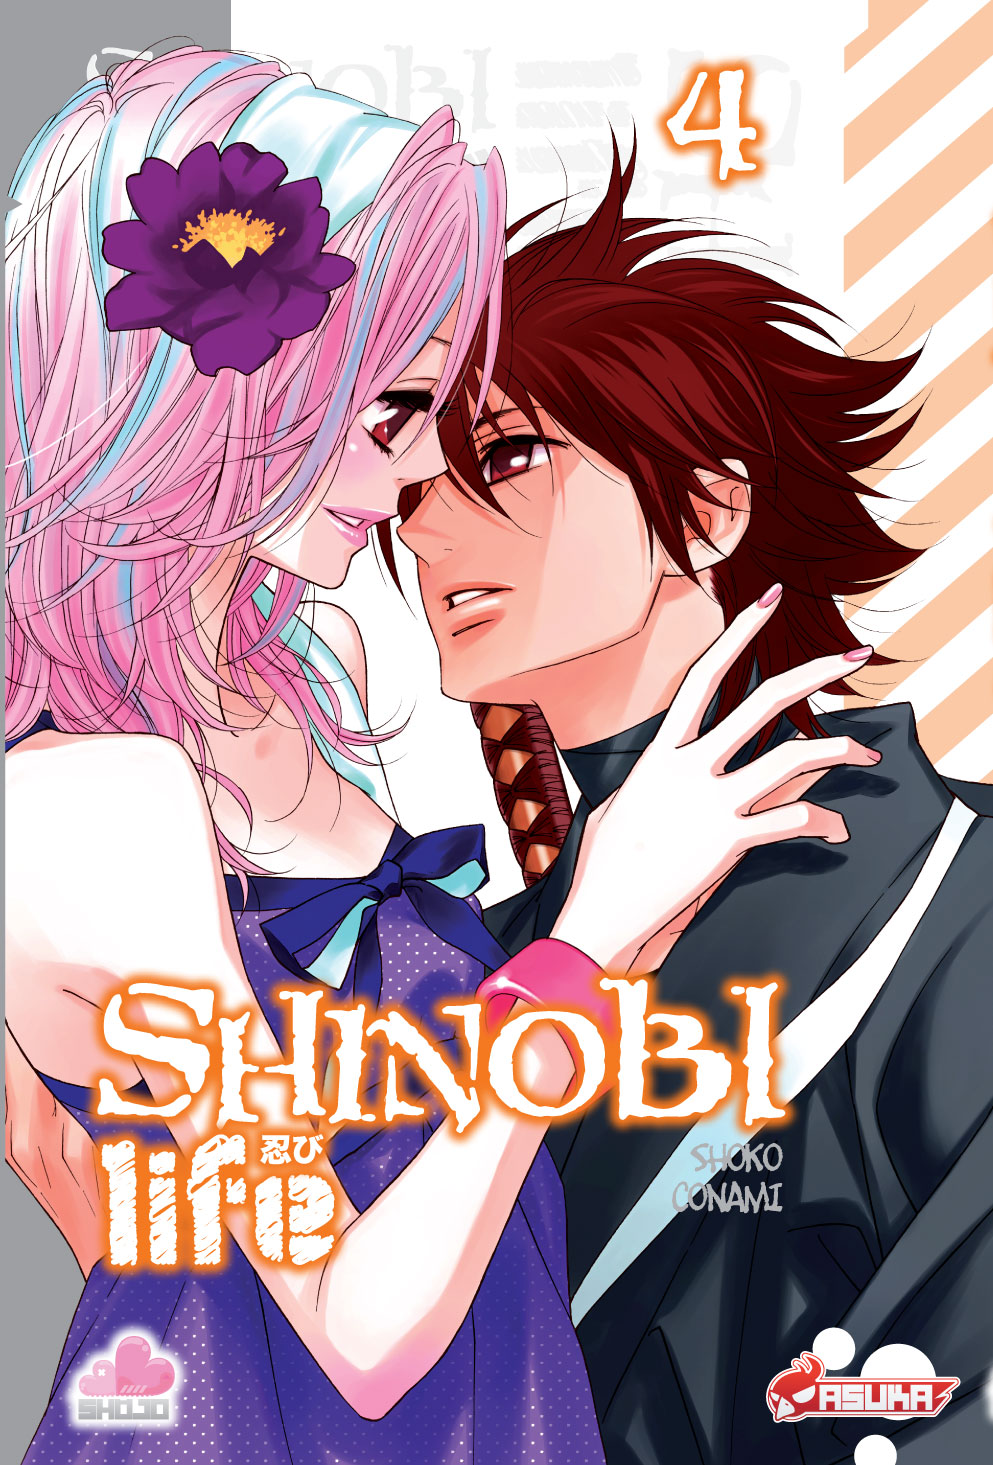 Shinobi Life #17